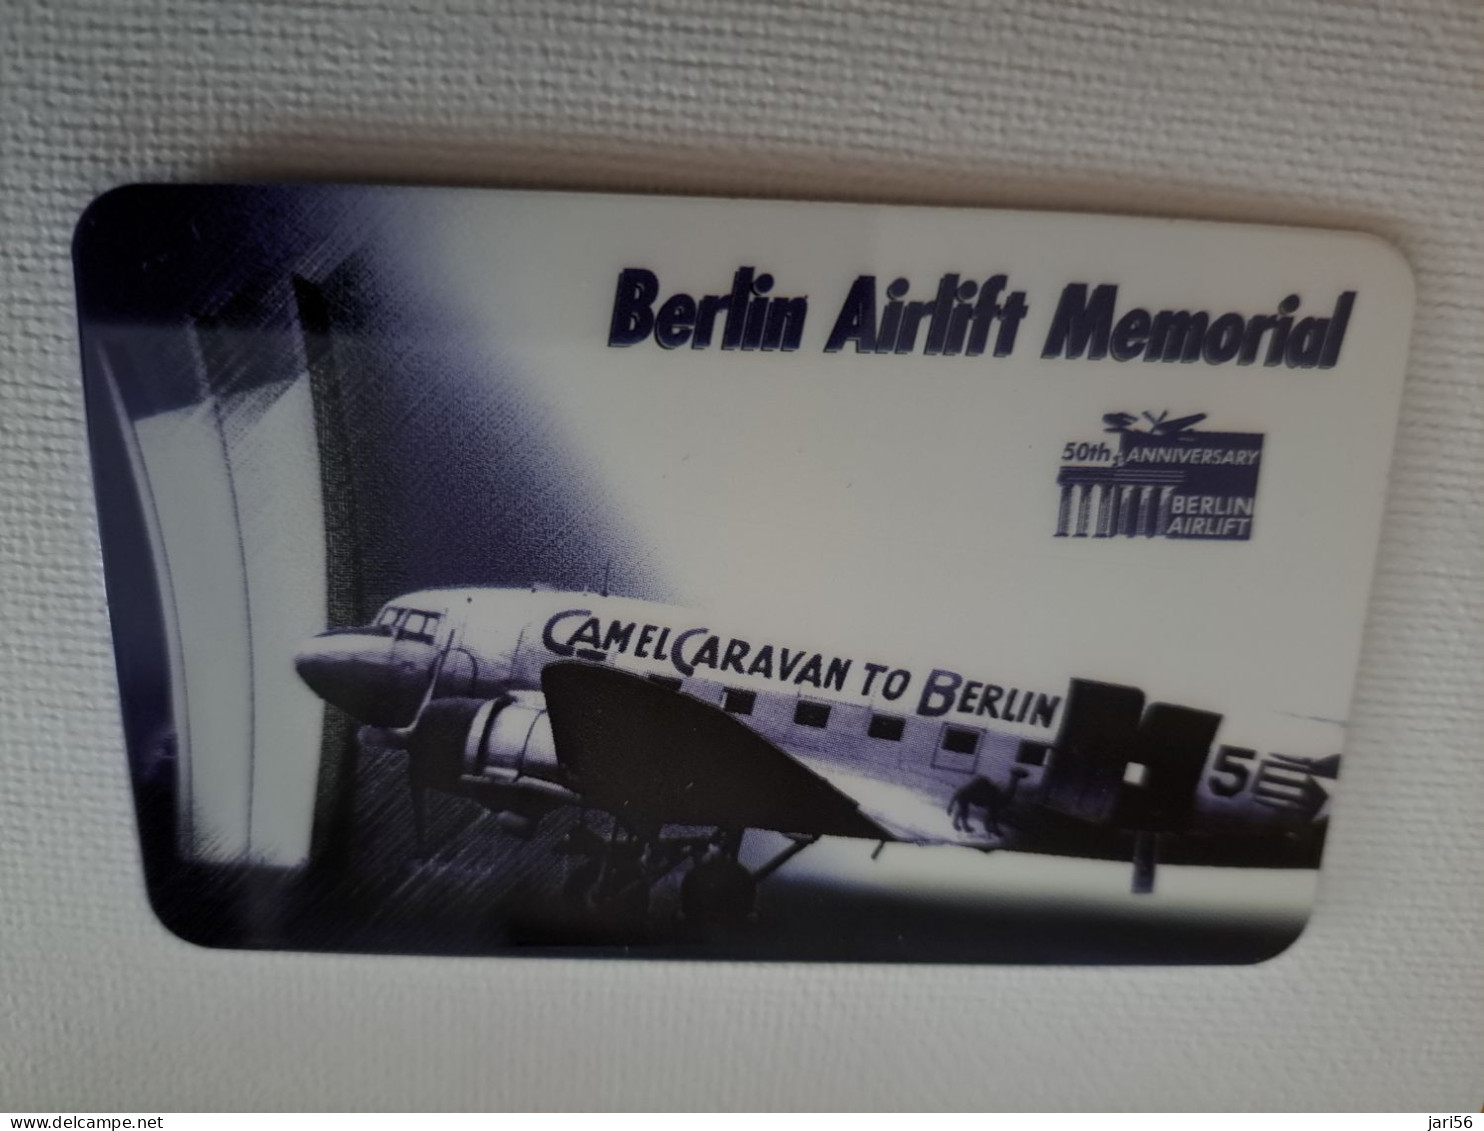 GREAT BRITAIN /20 UNITS / BERLIN AIRLIFT MEMORIAL/ AIRPLANE     /  / (date 09/98) PREPAID CARD / MINT  **15759** - [10] Colecciones